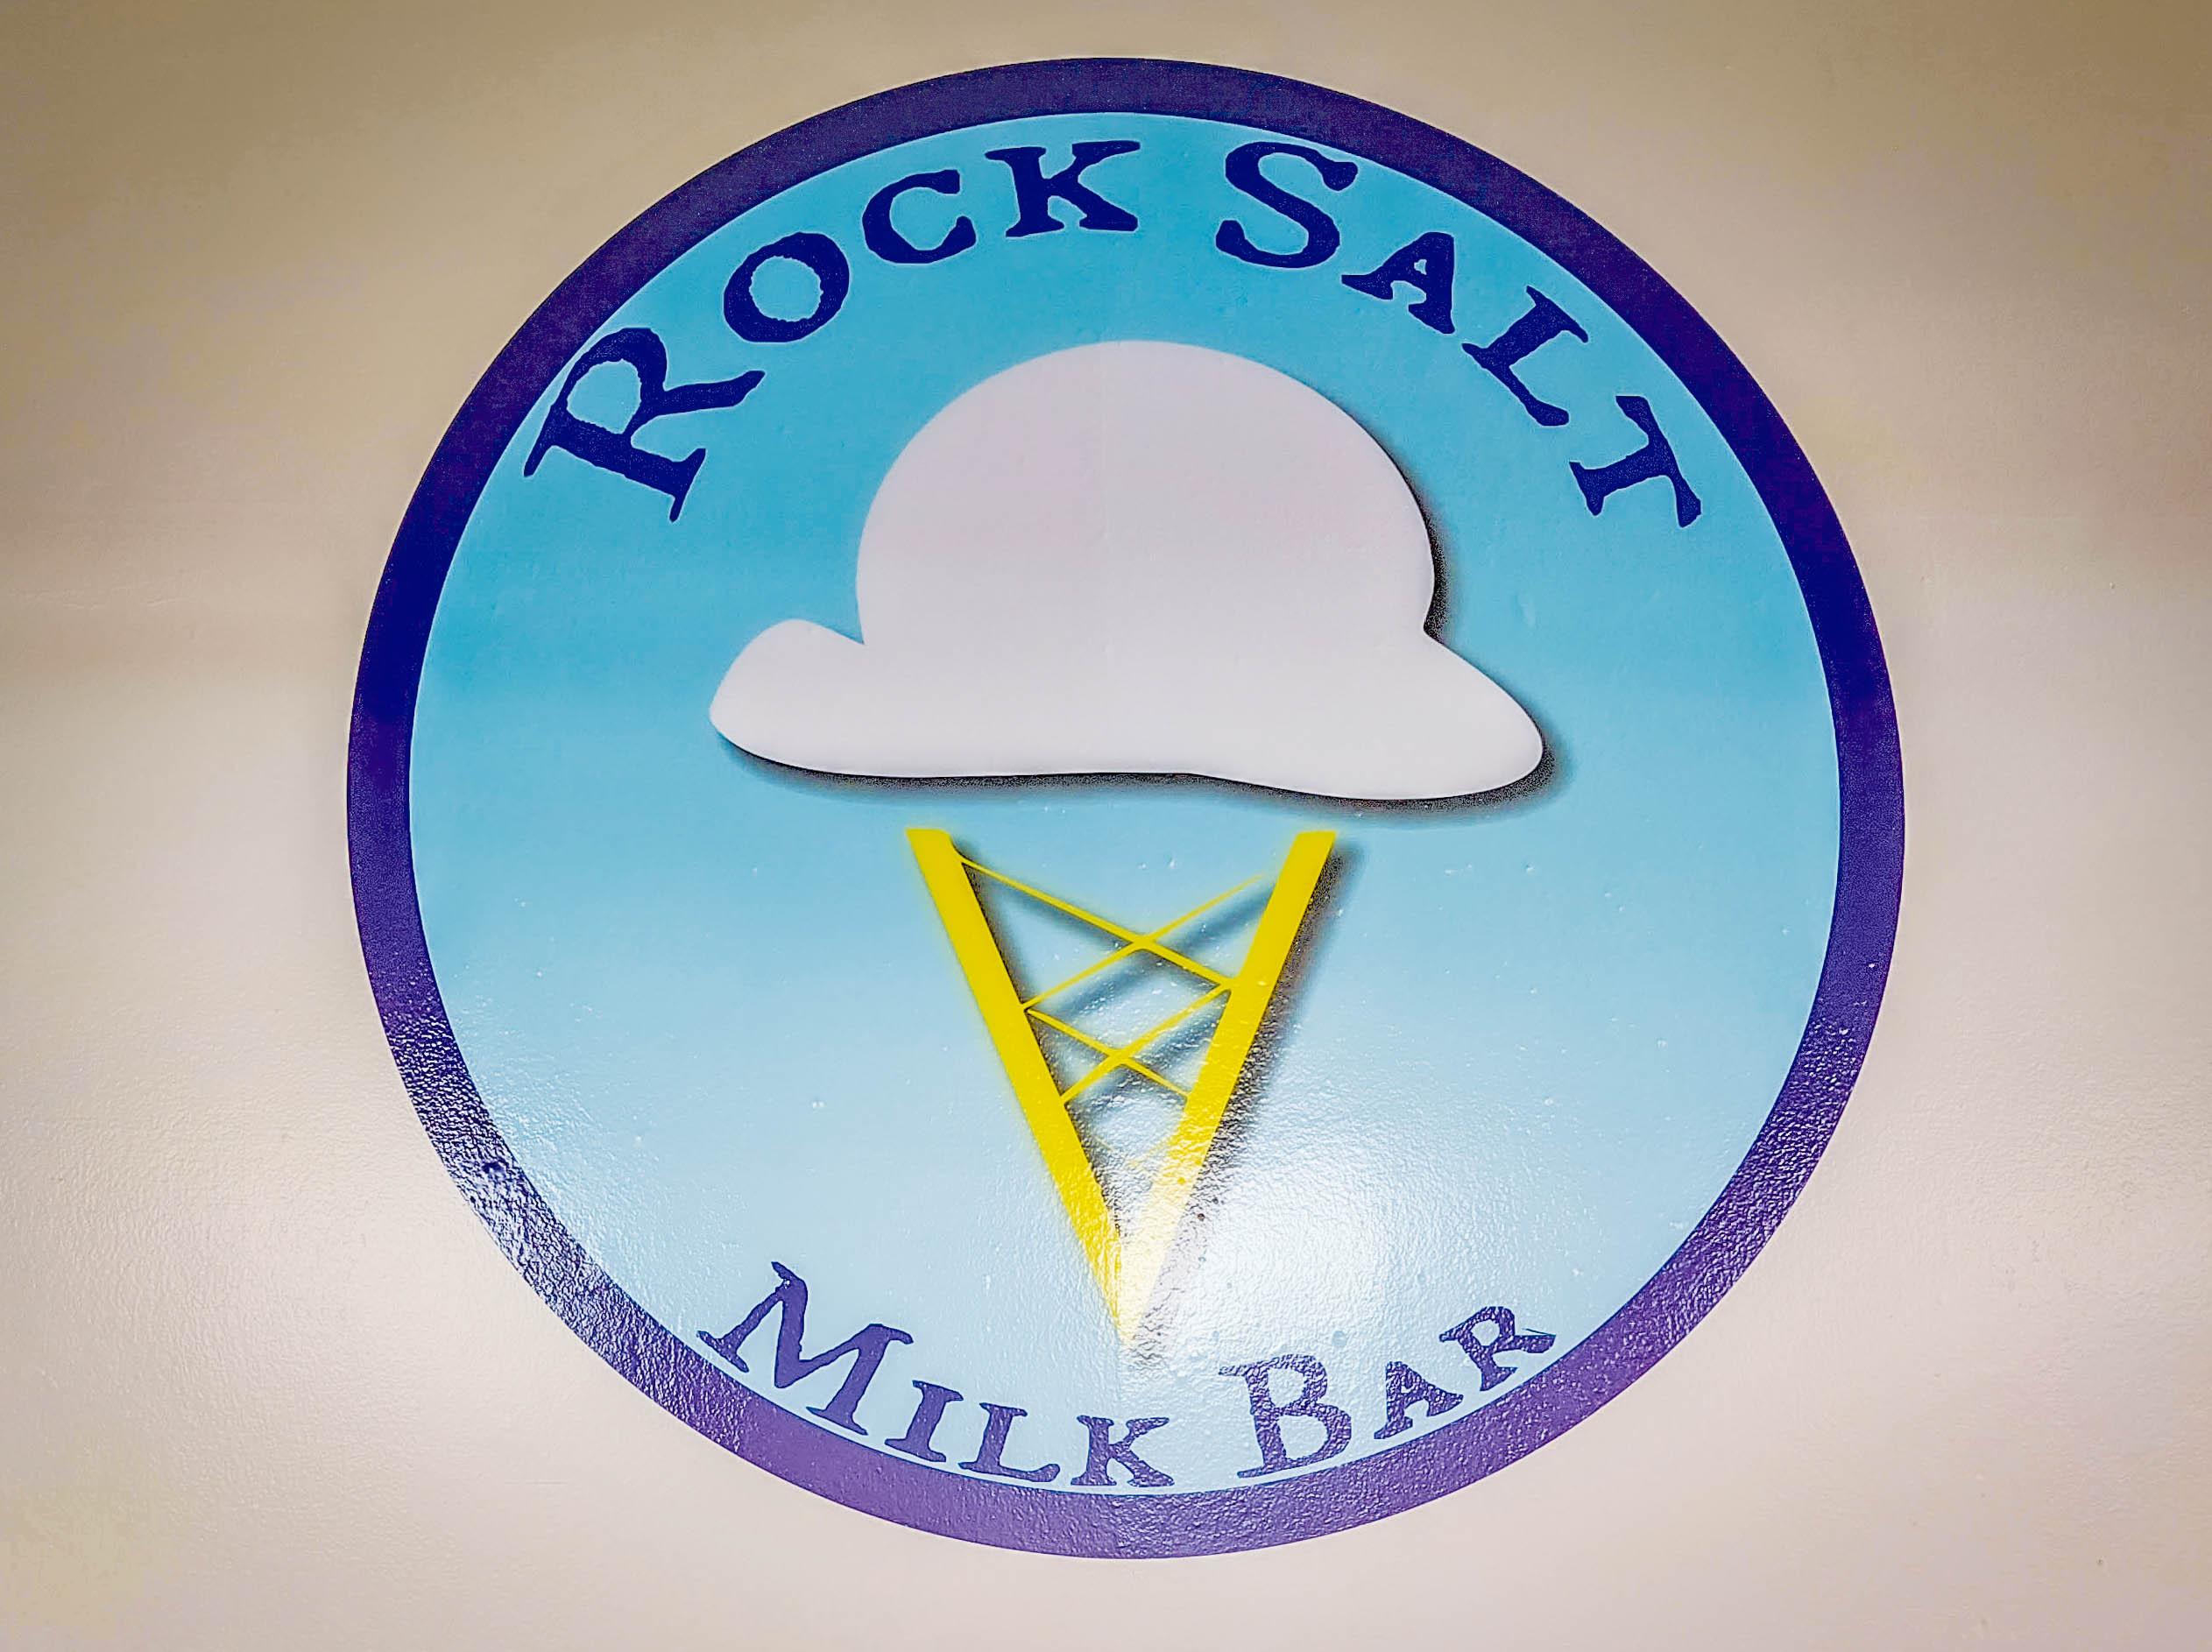 20200624-FOOD-rock-salt-milk-bar-4-2.jpg?mtime=20200623172452#asset:49901